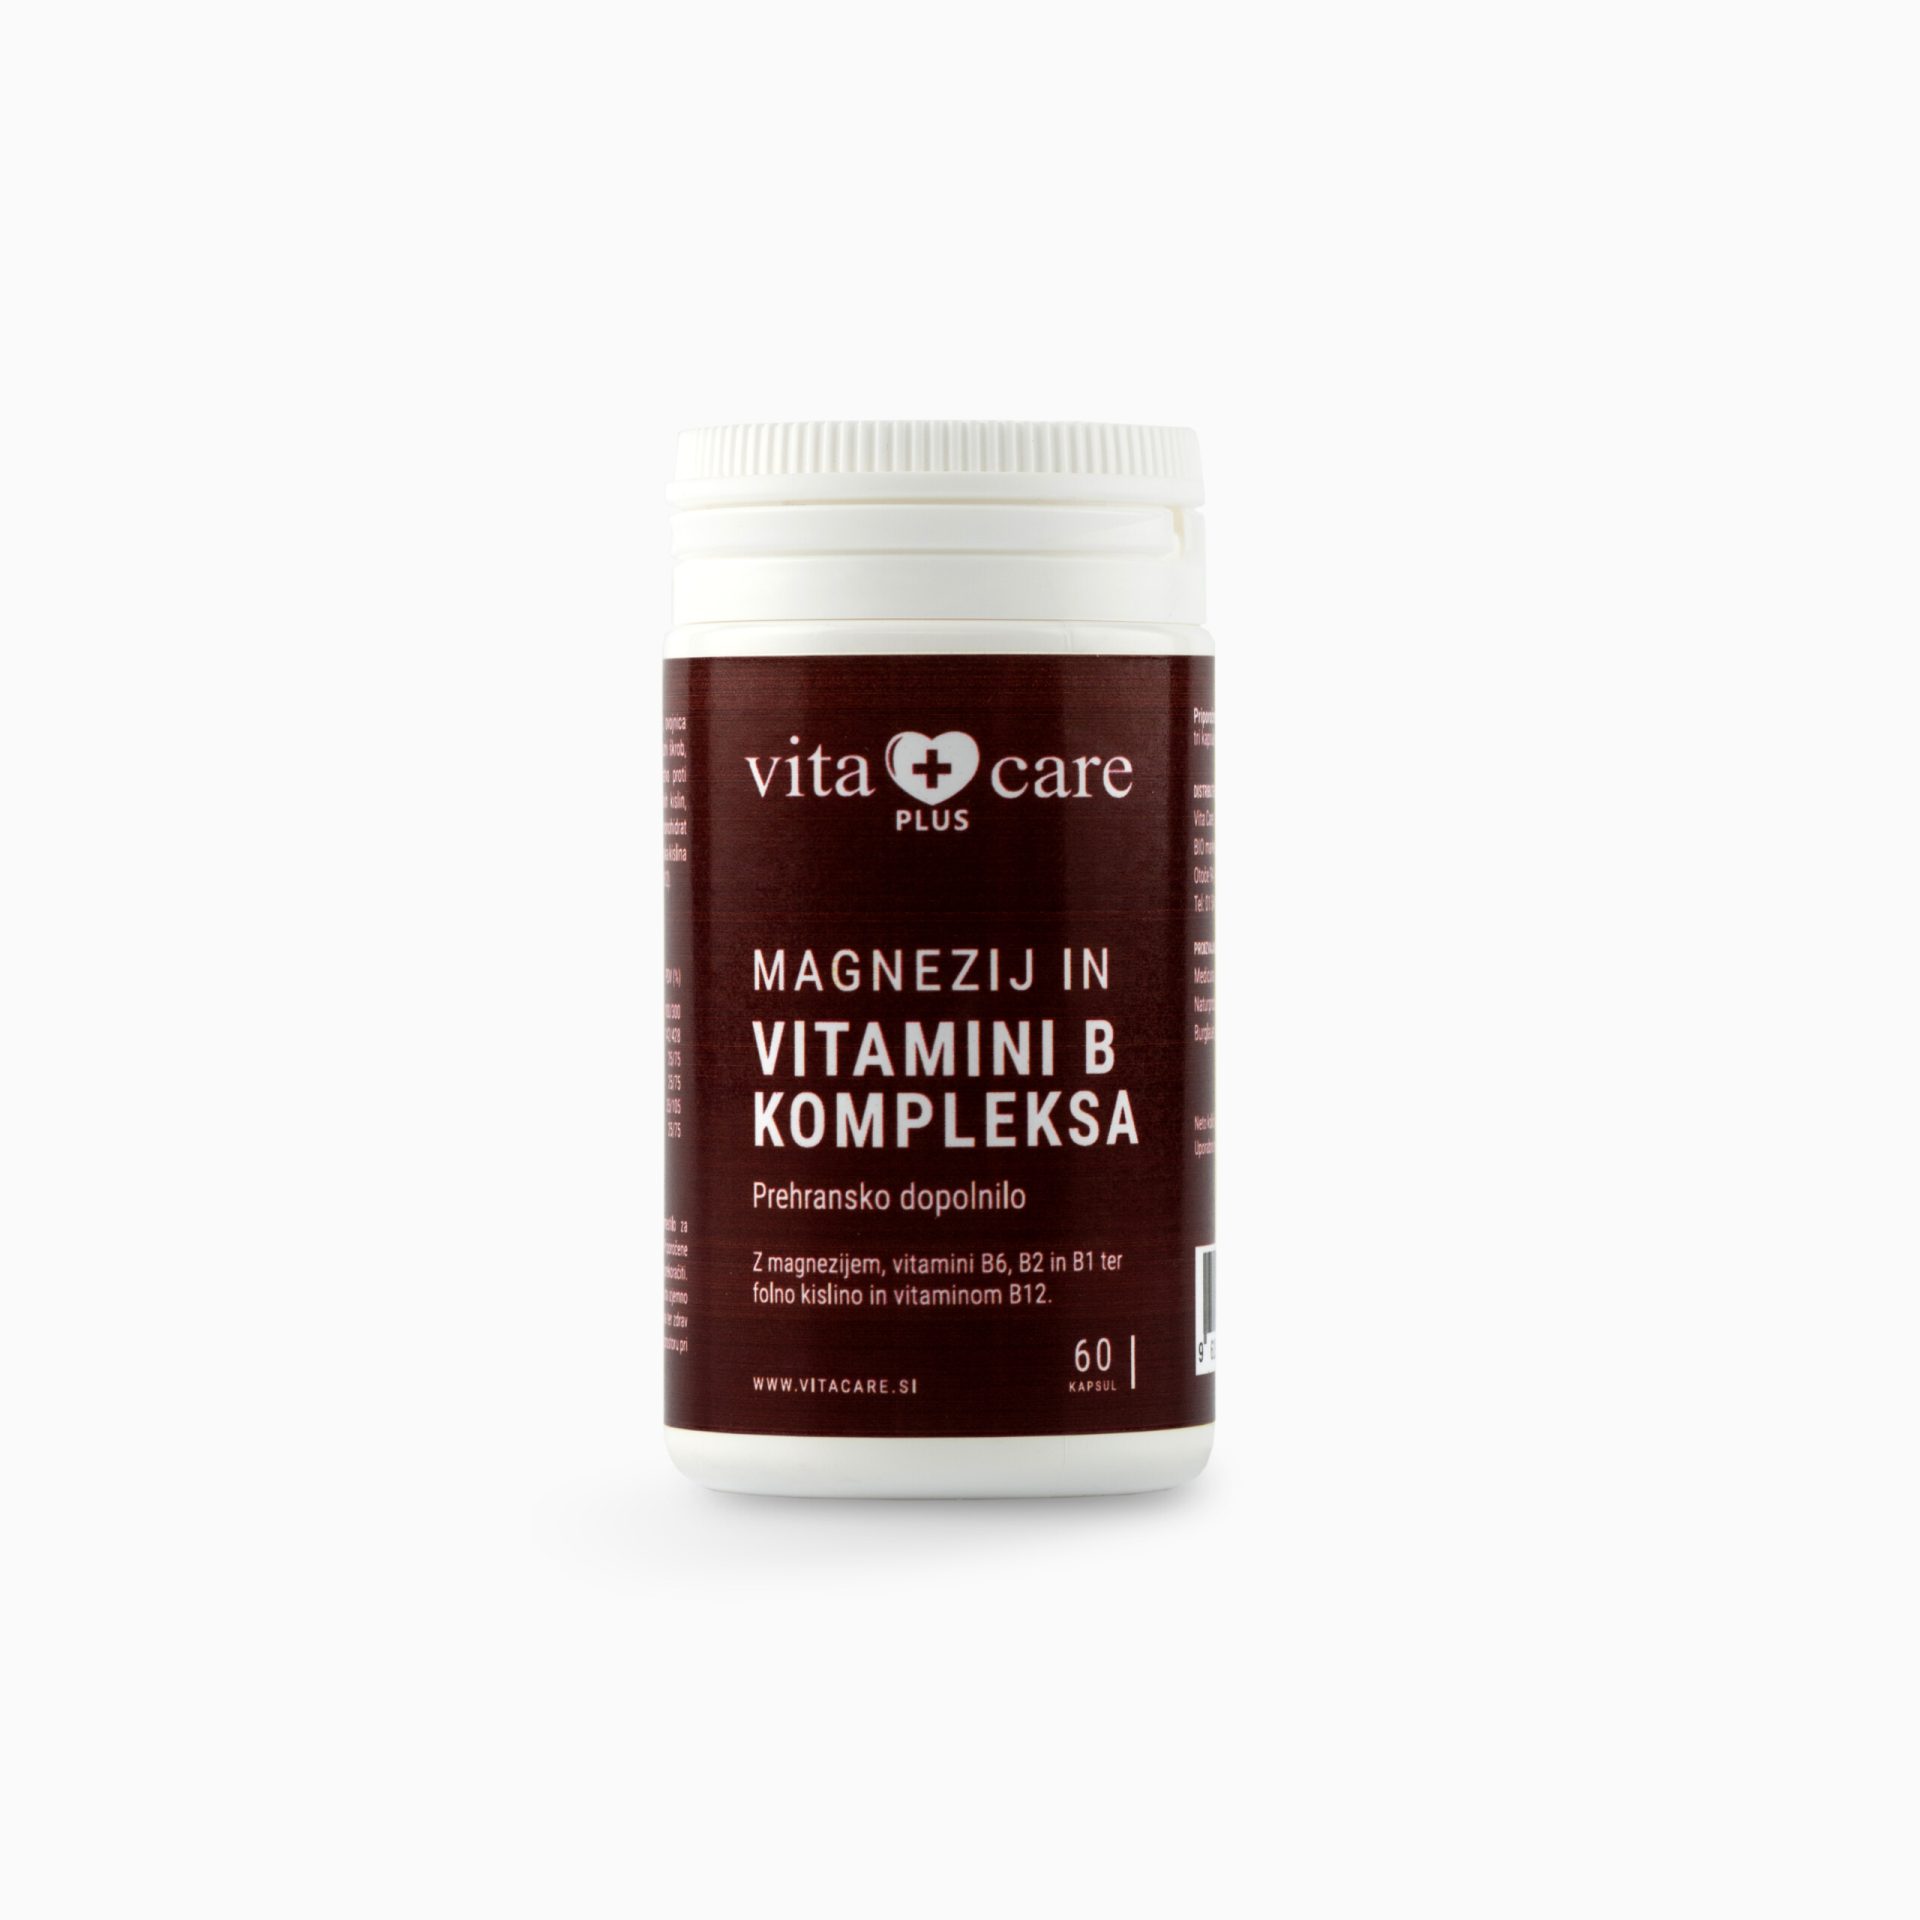 Vita Care Plus Magnezij in vitamini B kompleksa, 60 kapsul